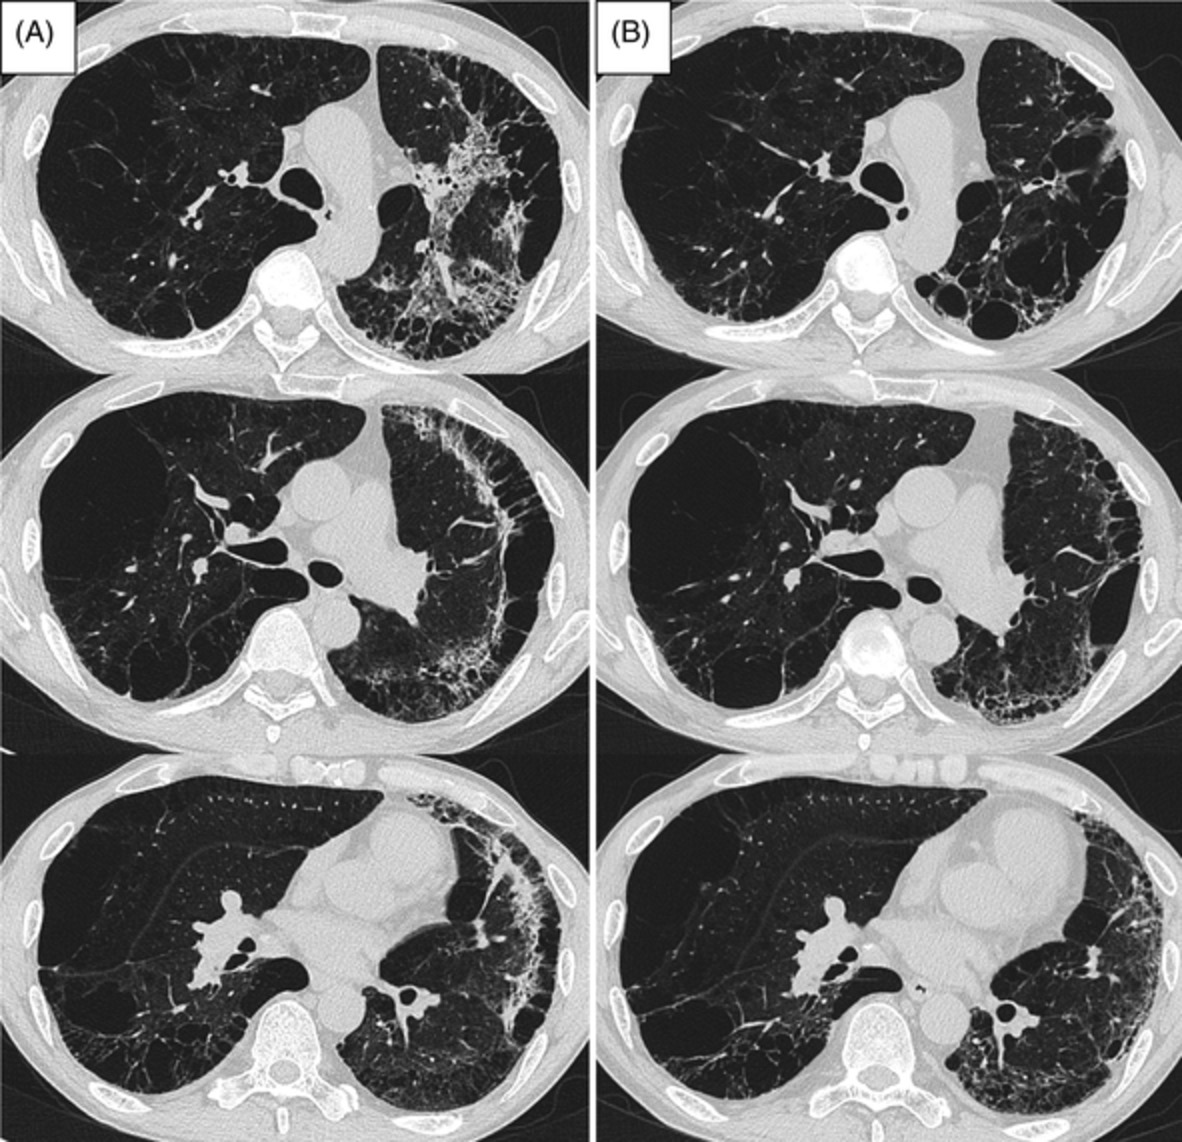 Unusual lung adenocarcinoma spread along with pulmonary emphysema